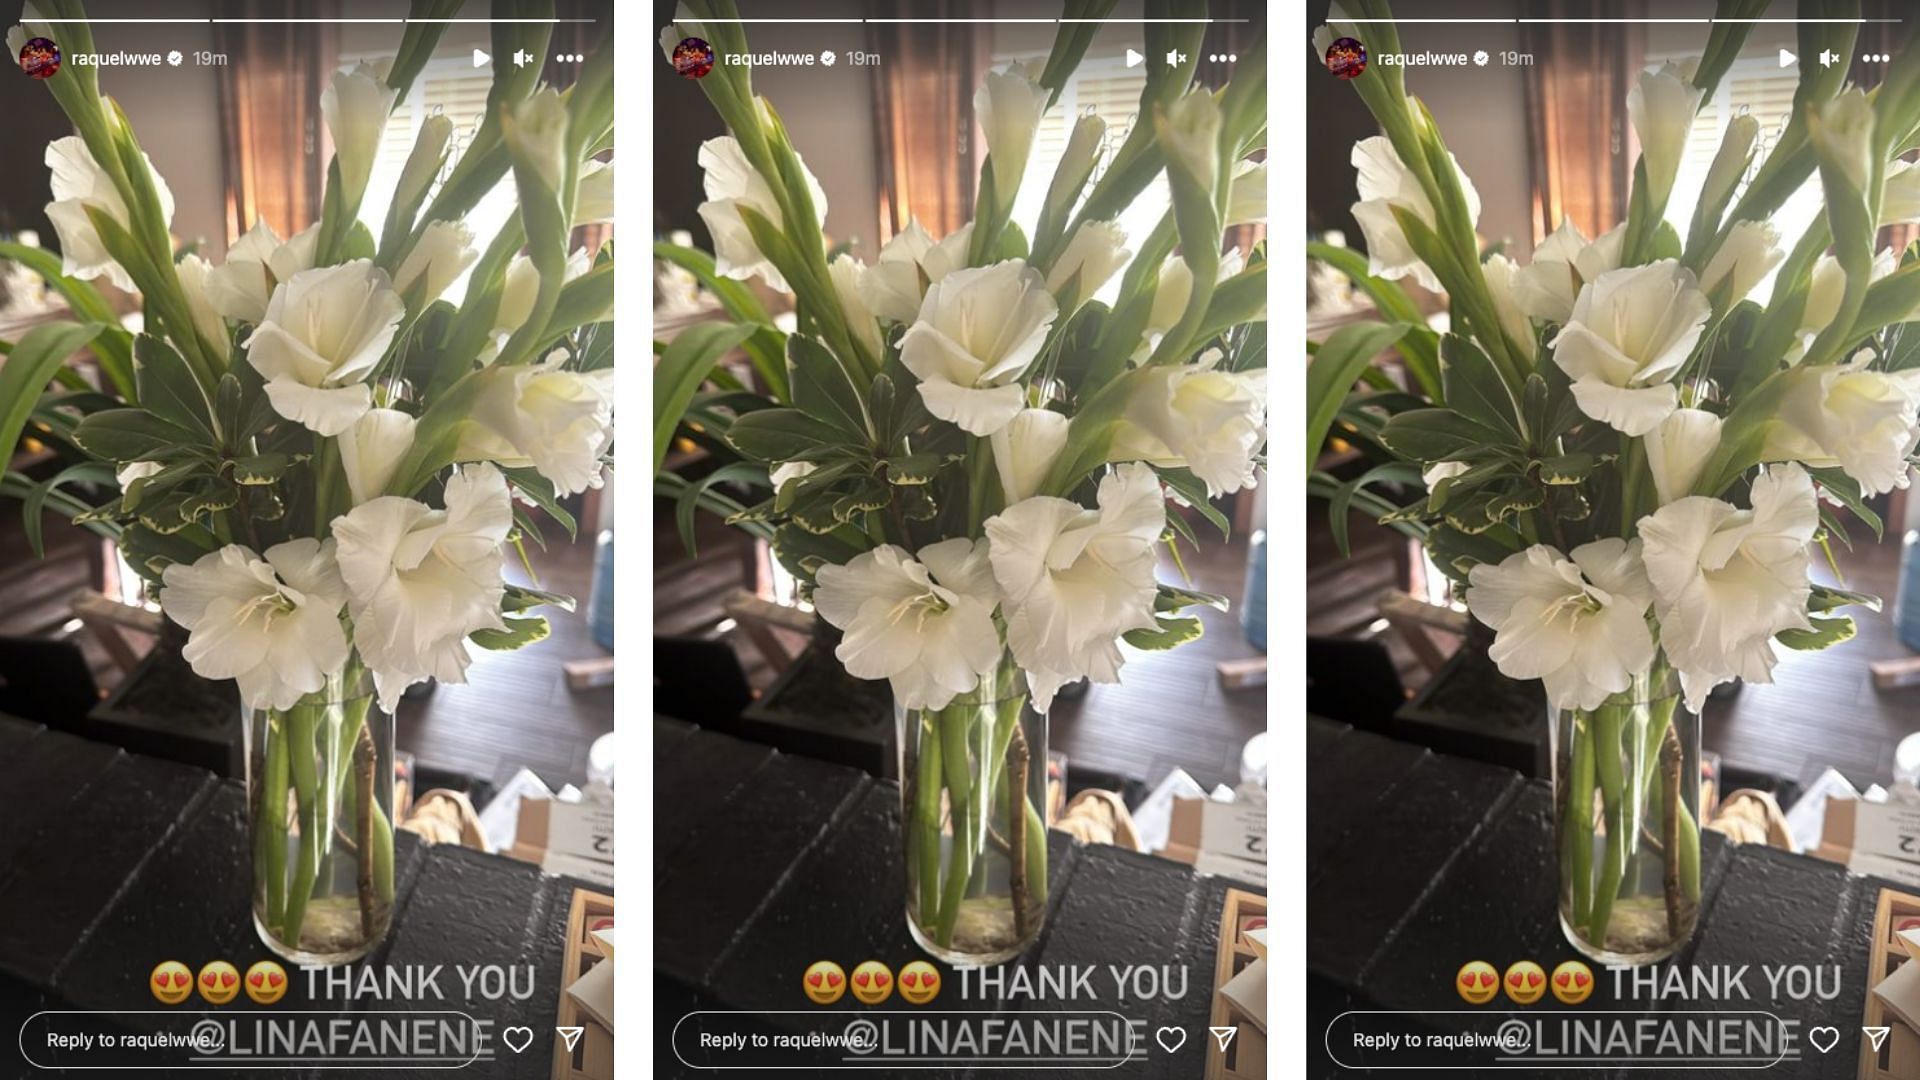 Rodriguez thanks Jax for sending her flowers